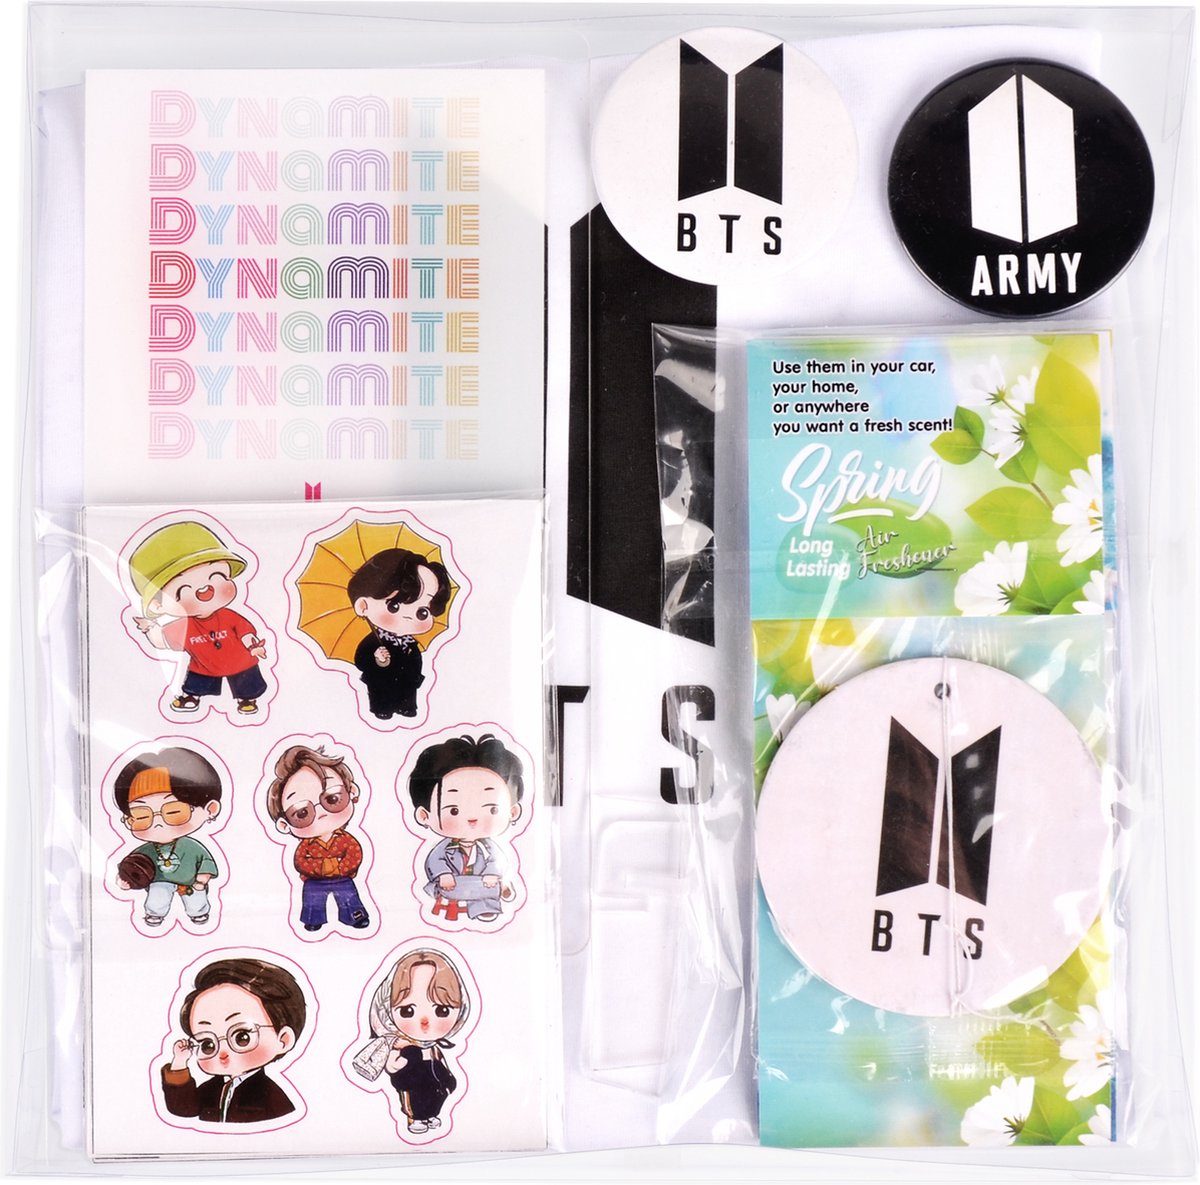 BTS Gift Set (XL) - Spotify Song Sign - Tshirt - Stickers - Car Air Freshener - BTS ARMY Merch - Birthday - KPOP Album Merchandise Gift